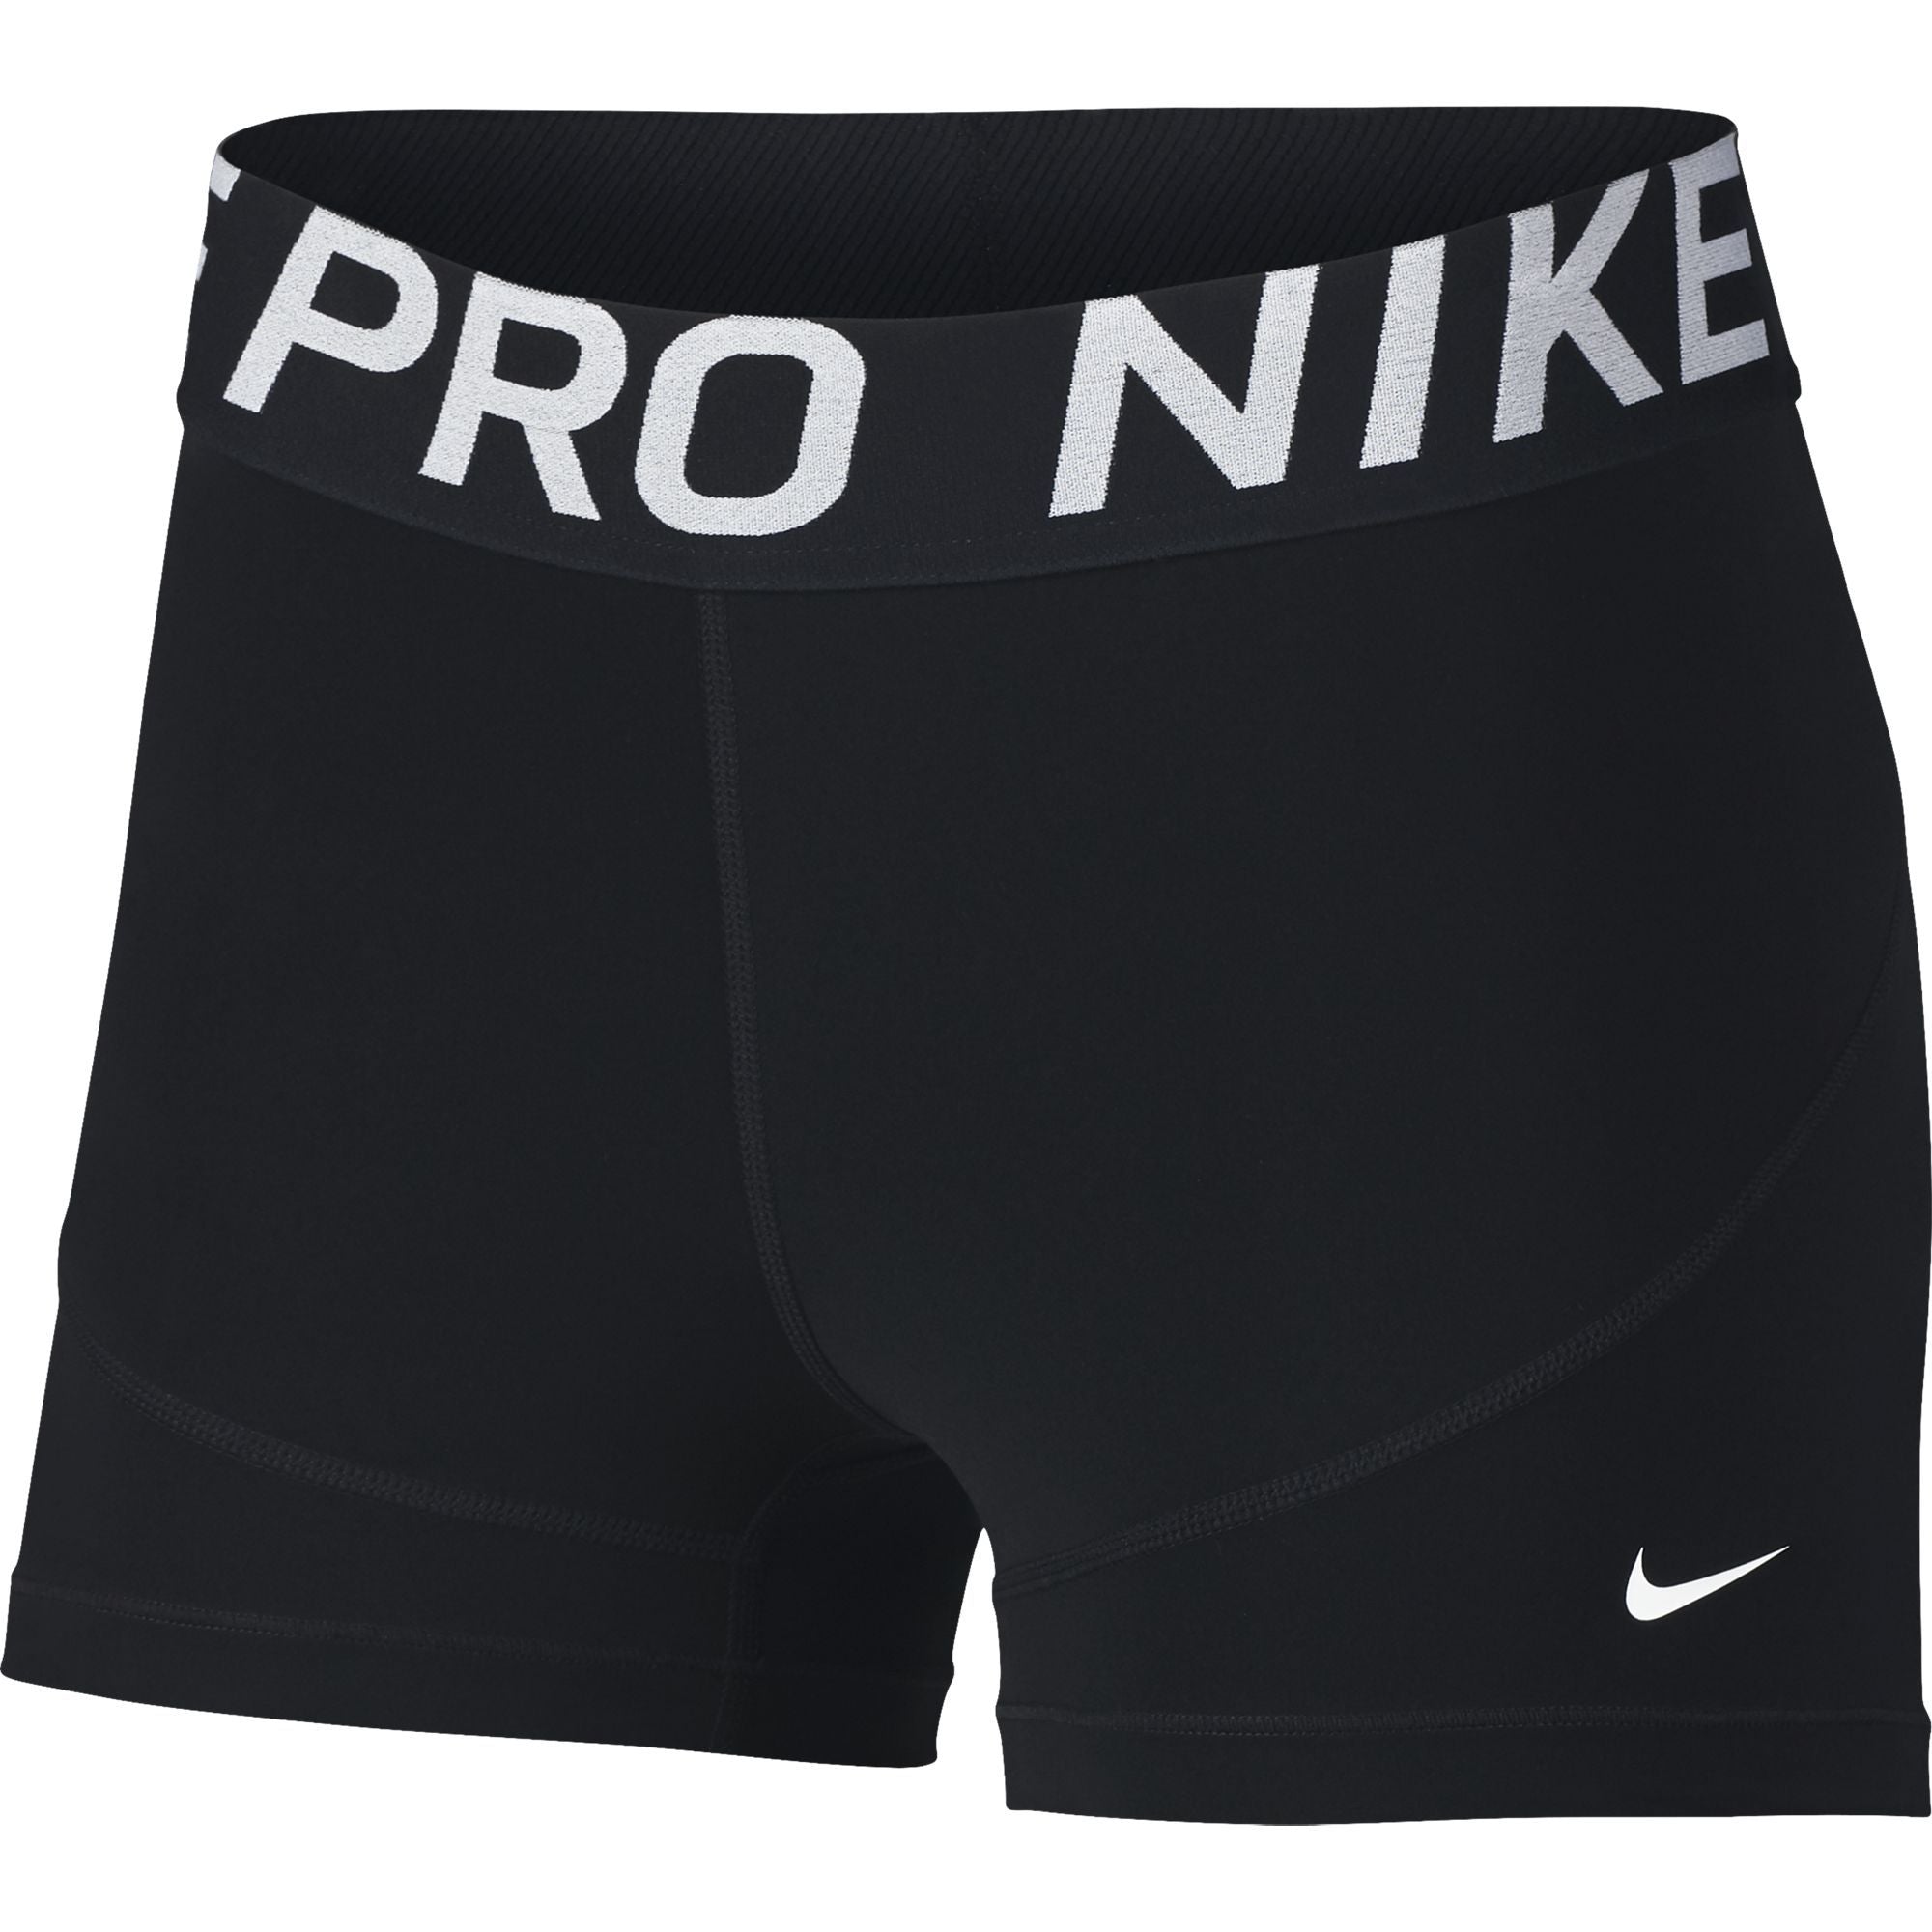 Шорты найк про. Nike Pro shorts. Шорты Nike Pro Dri-Fit. Nike Pro Dri-Fit компрессионные шорты черный. Nike Dri Fit 3.0 шорты.